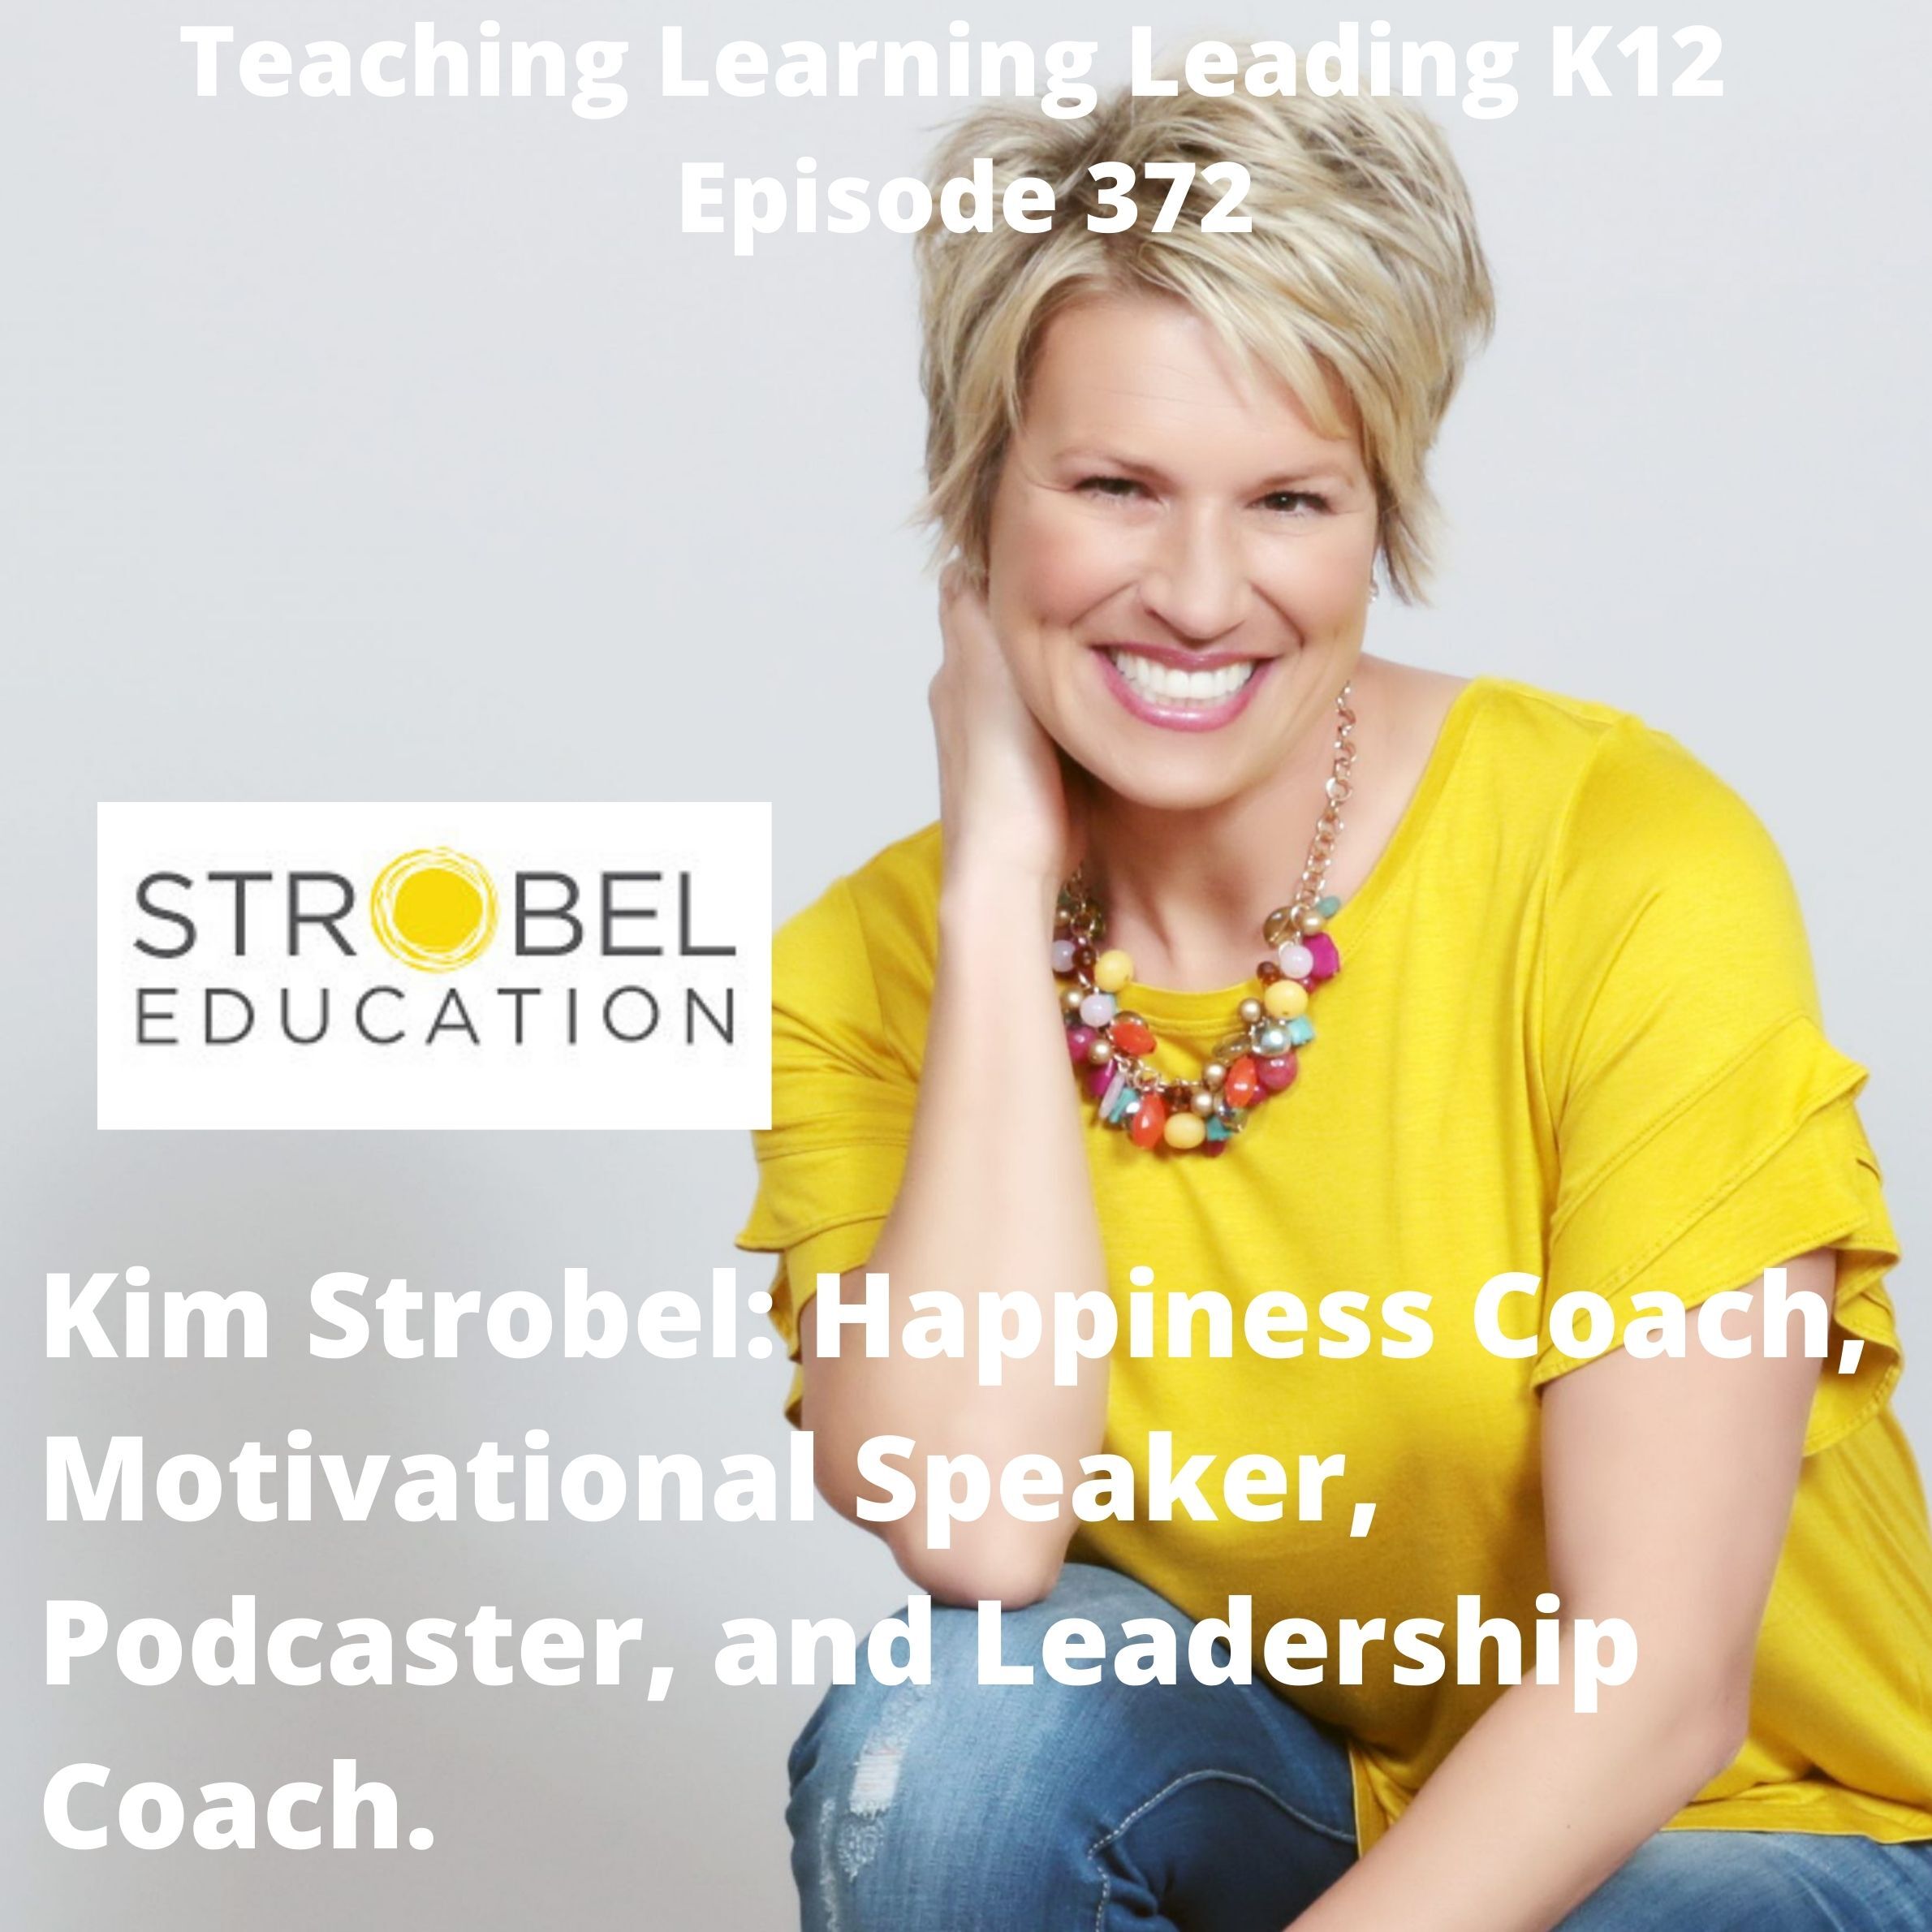 Kim Strobel: Happiness Coach, Motivational Speaker, and Leadership Consultant - 372